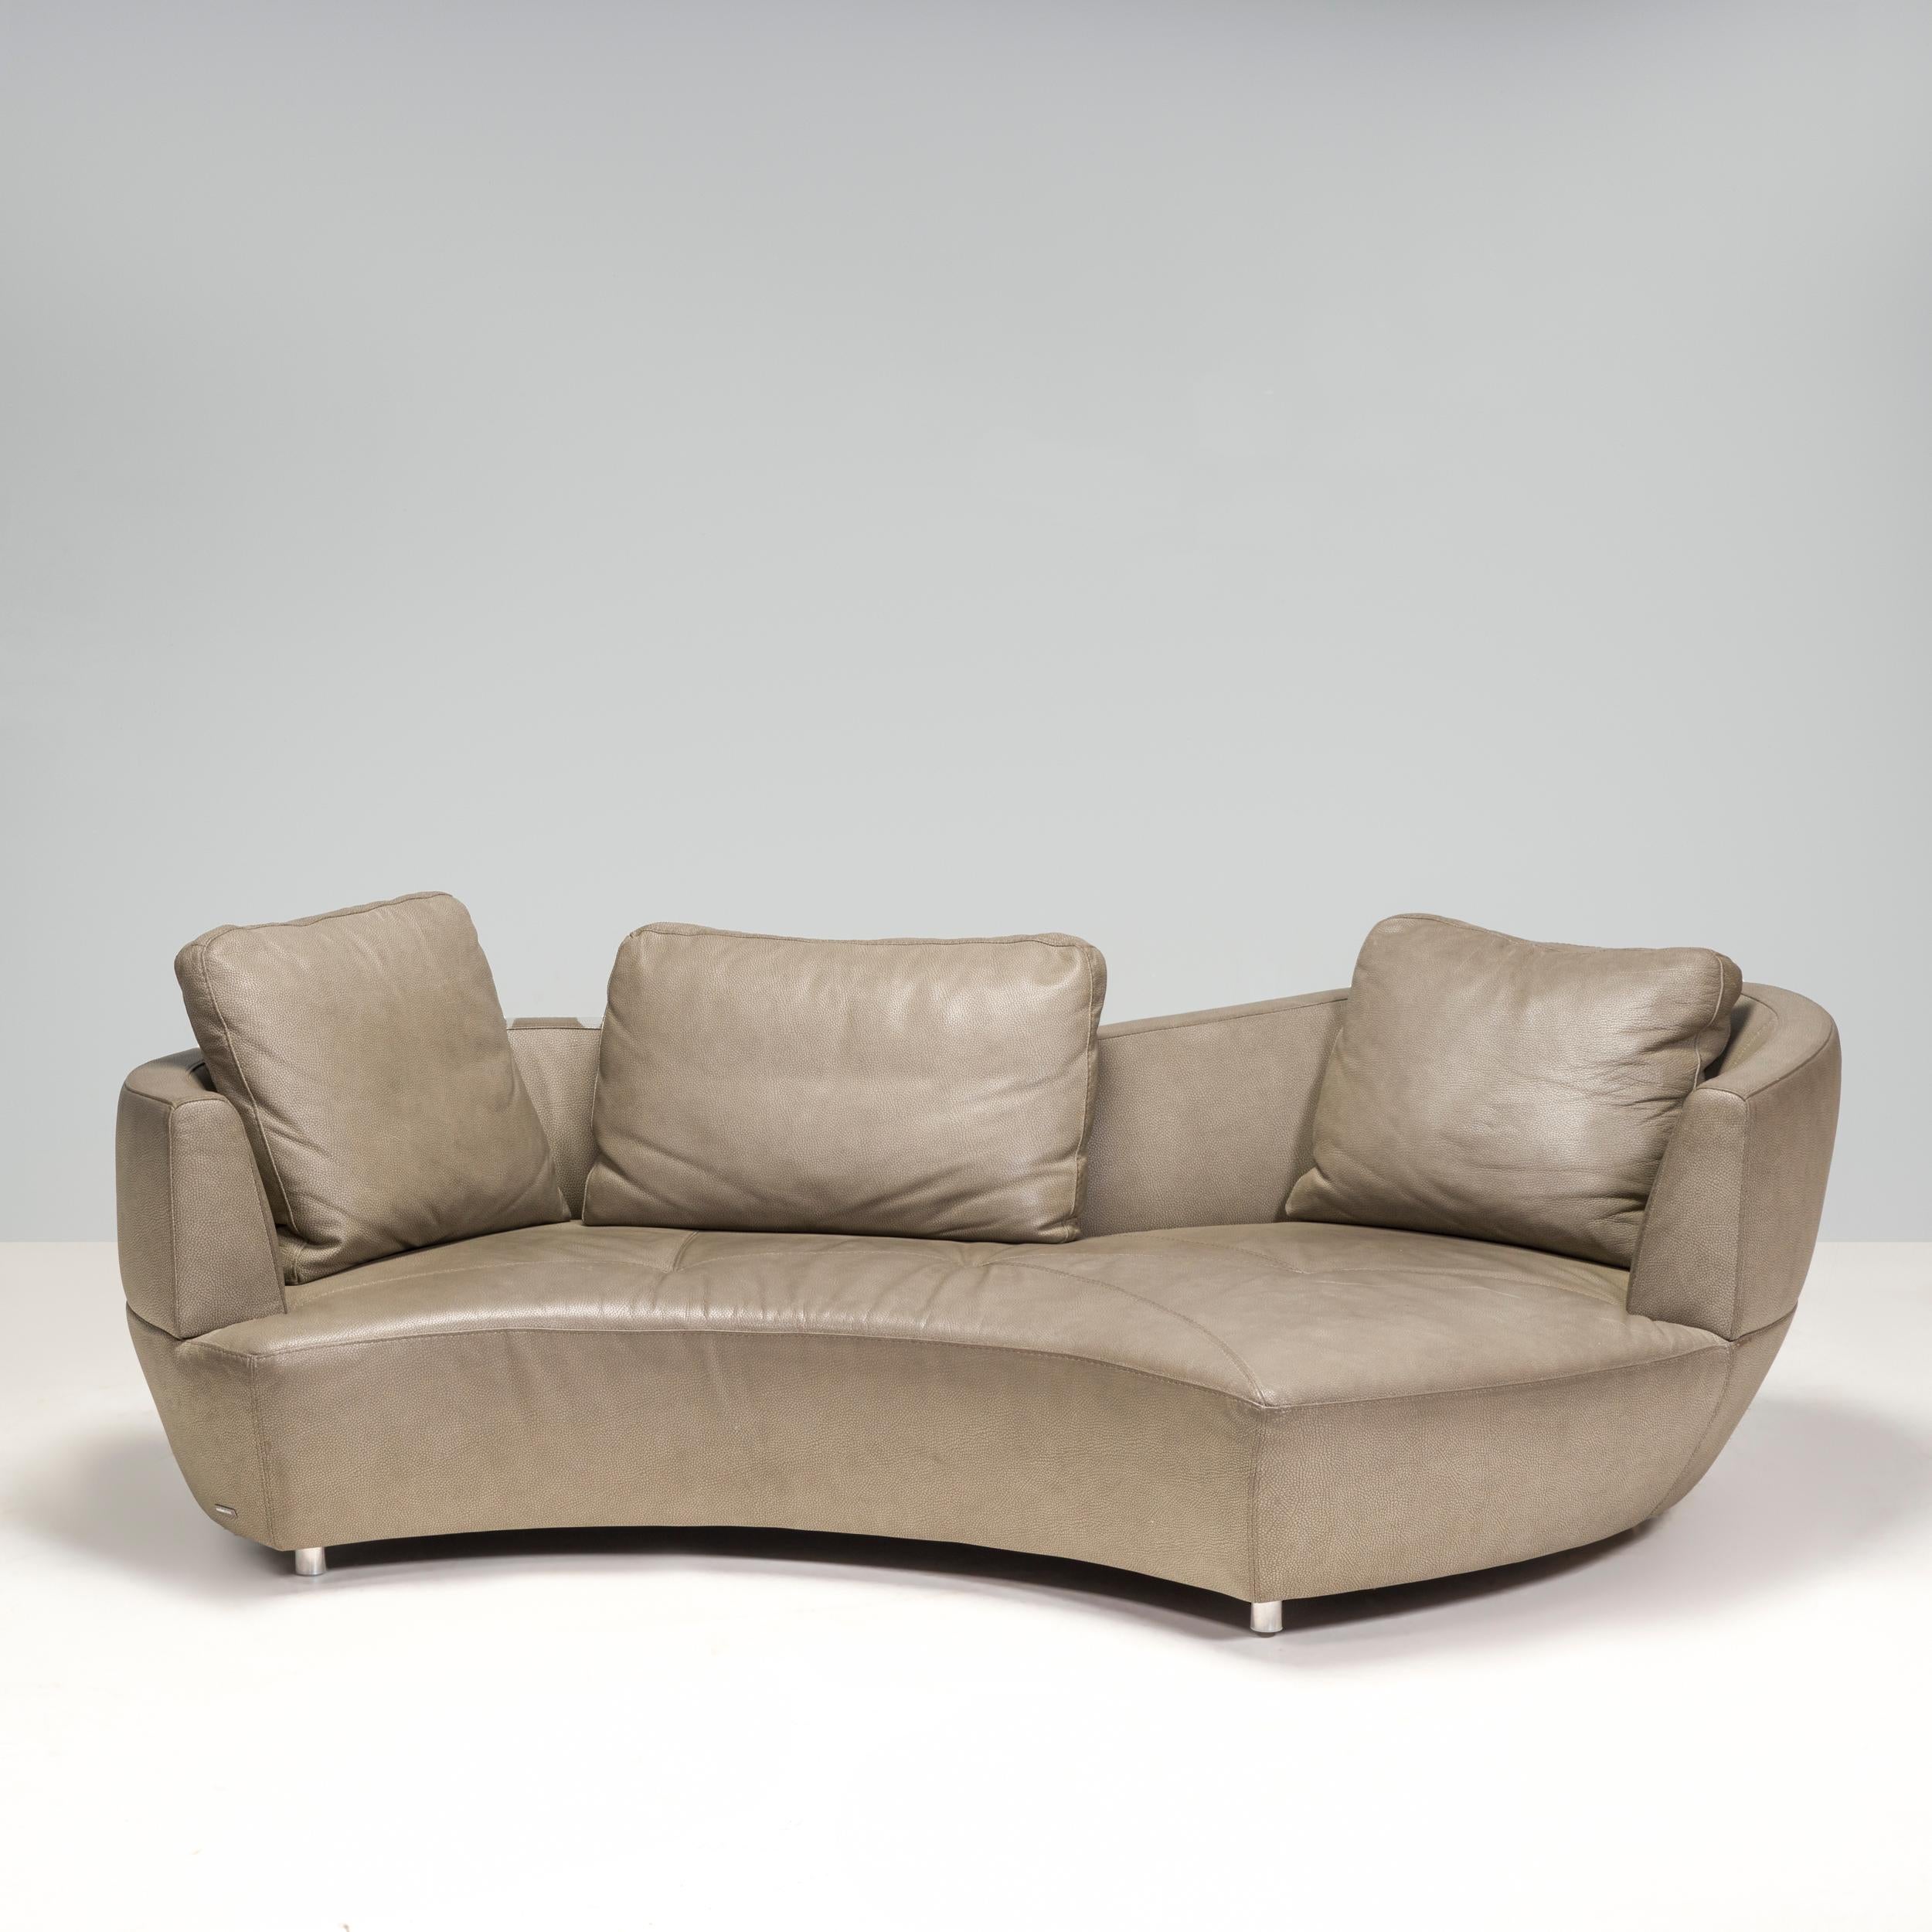 Modern Roche Bobois by Gabriele Assmann & Alfred Kleene Leather Digital Curved Sofa For Sale